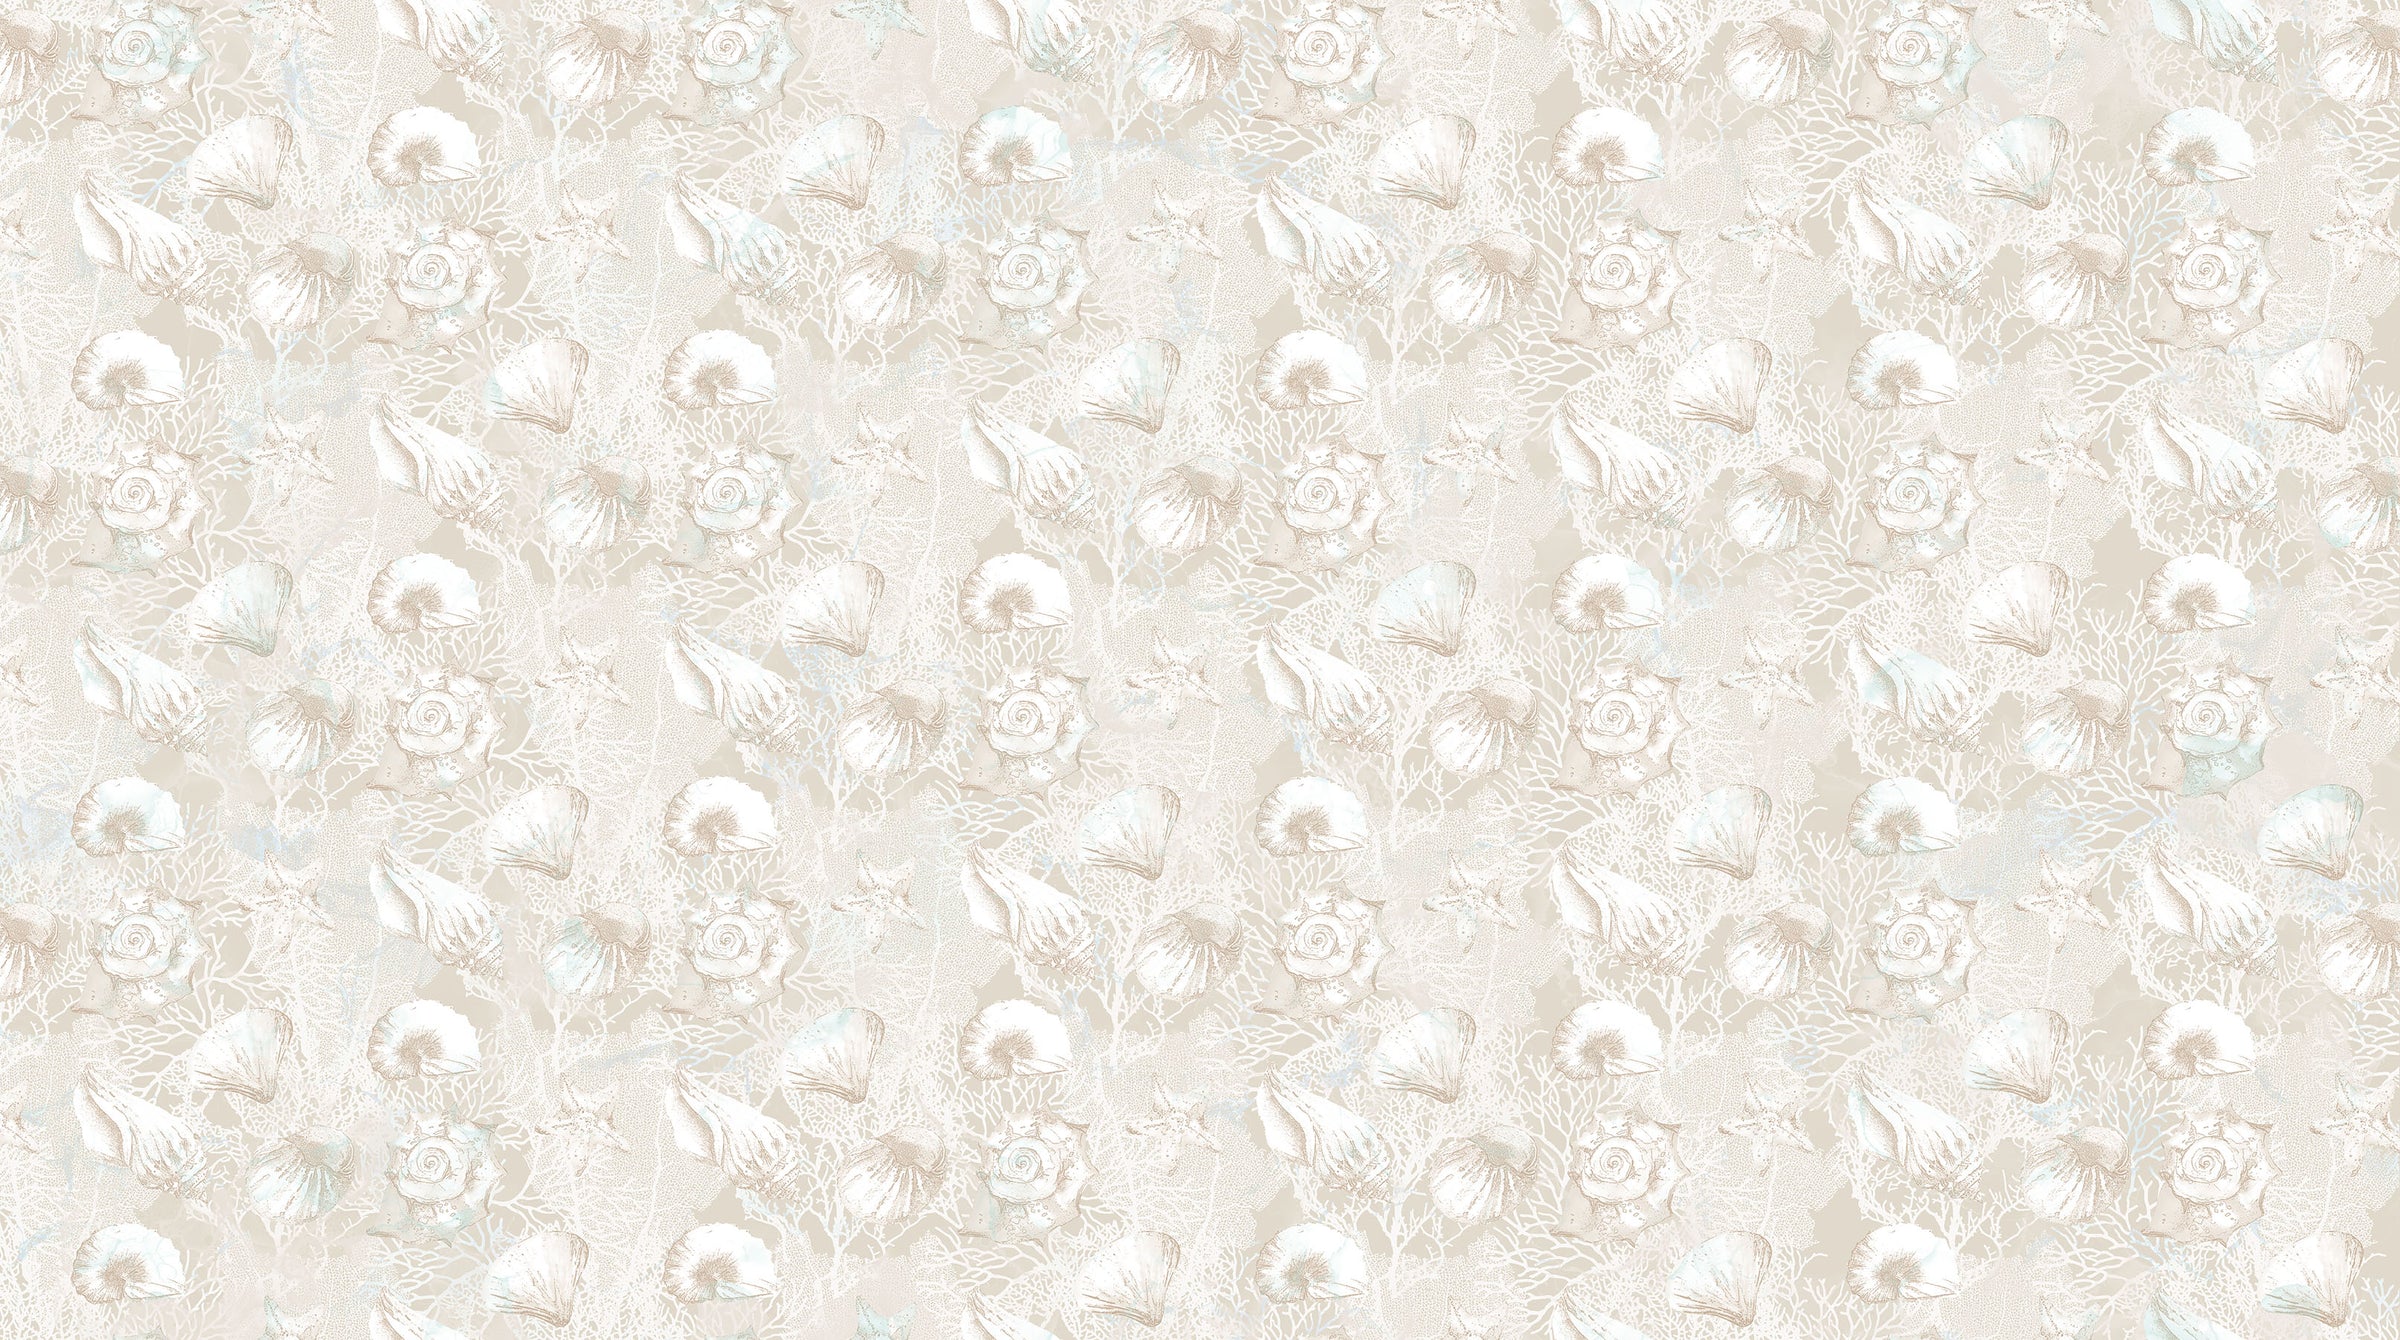 Sea Breeze Quilt Fabric - Shells in Cream - DP27098-11